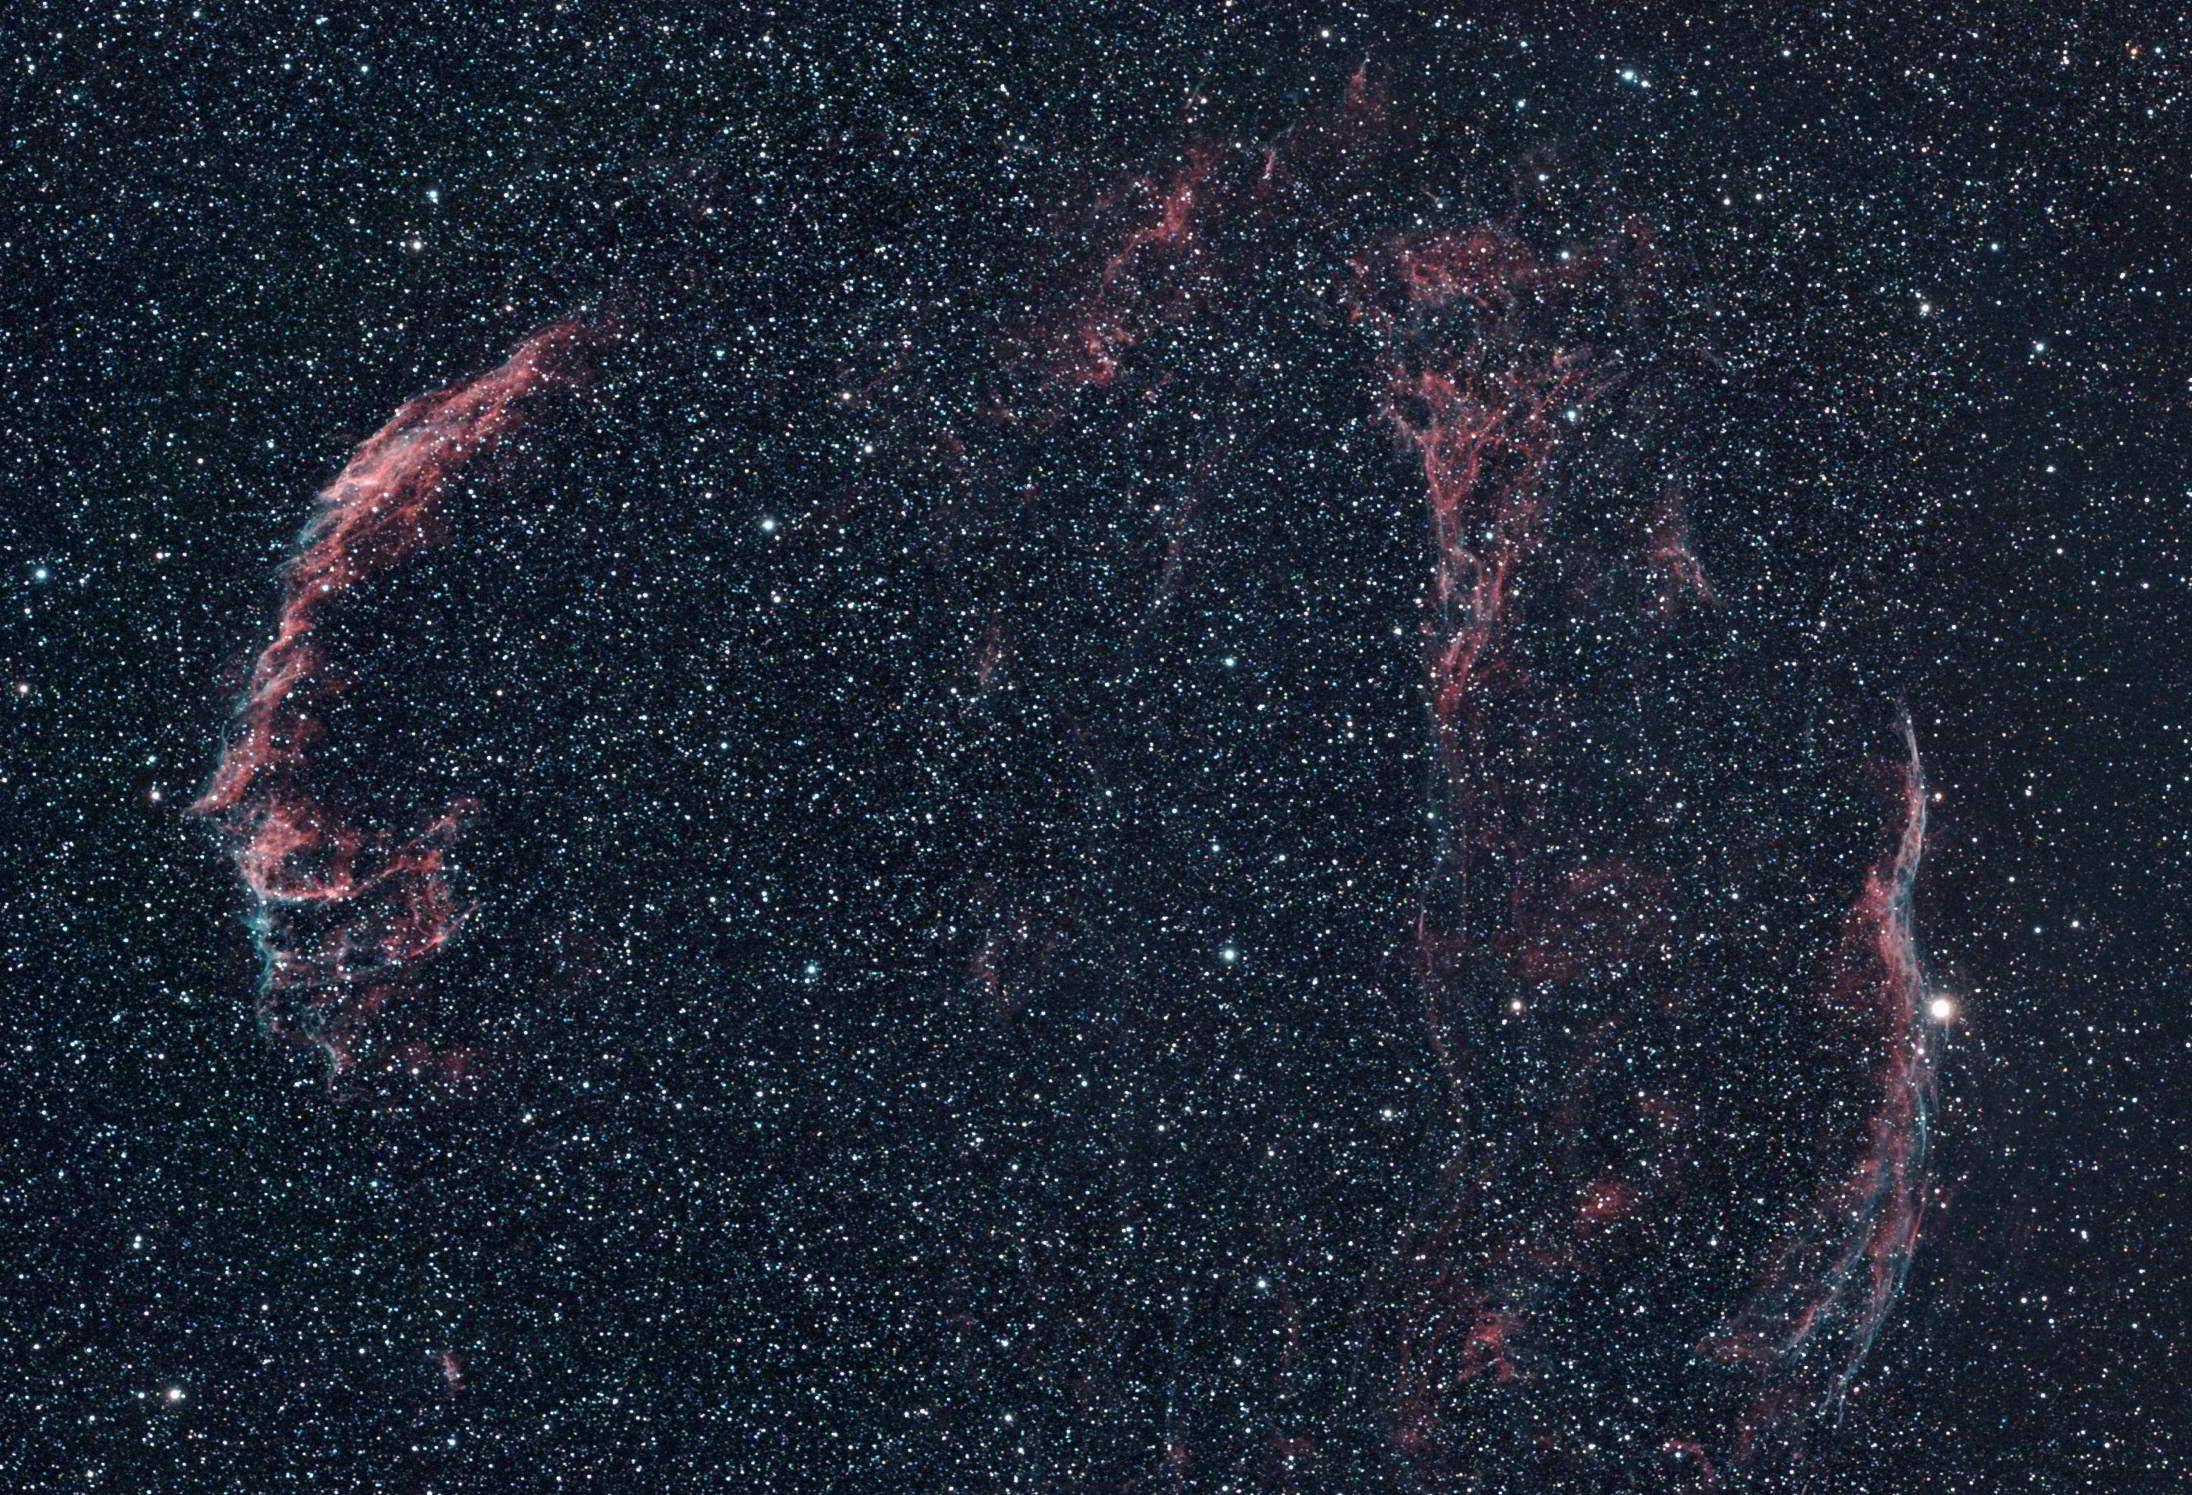 Veil Nebula_Ph. Lousberg